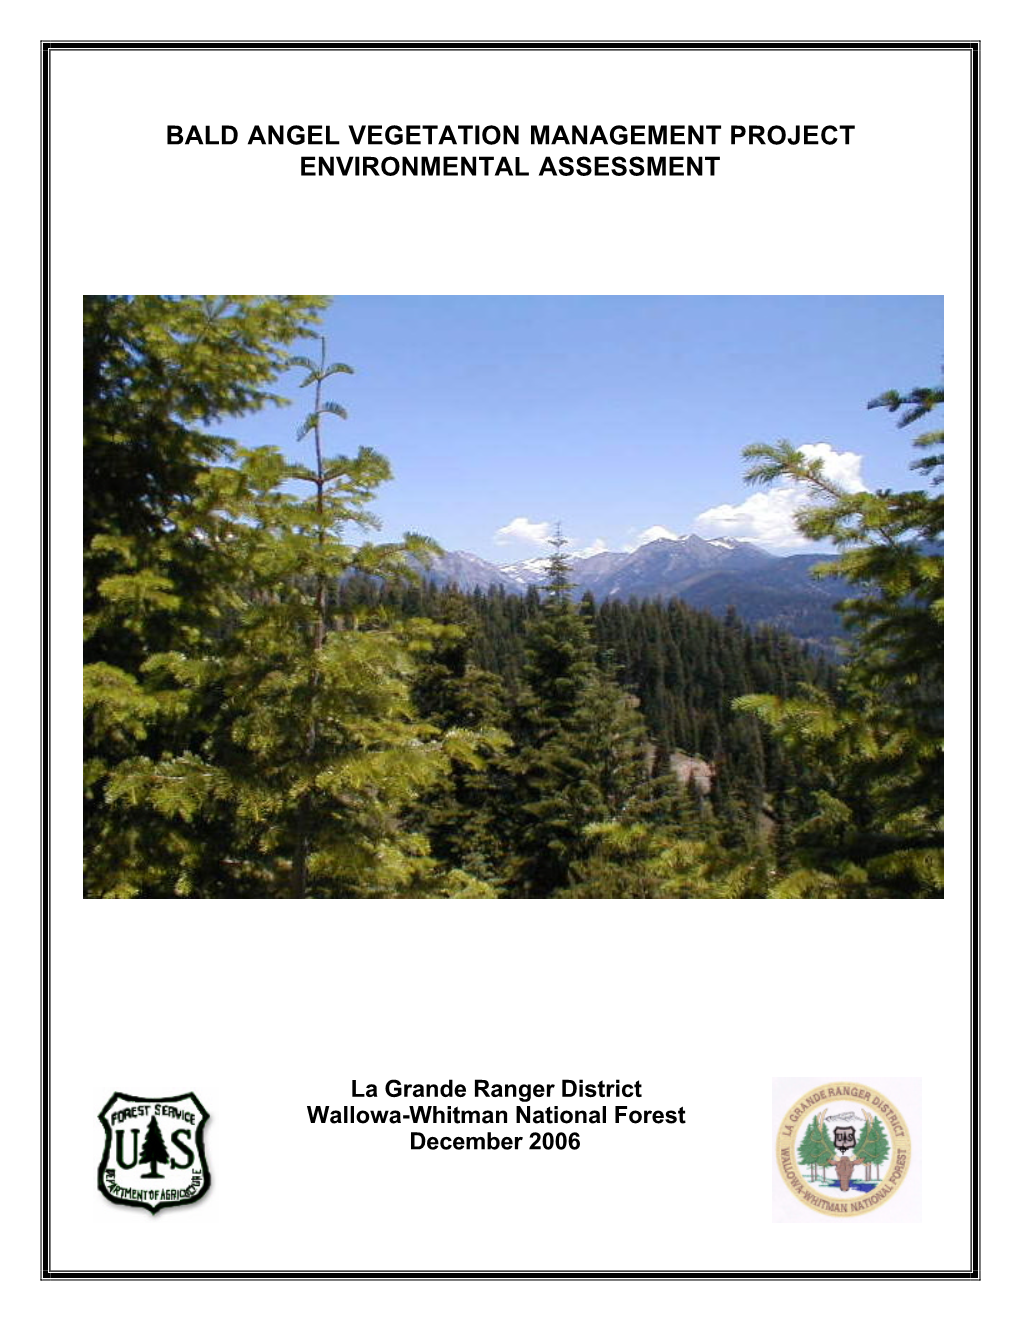 Bald Angel Vegetation Management Project Environmental Assessment